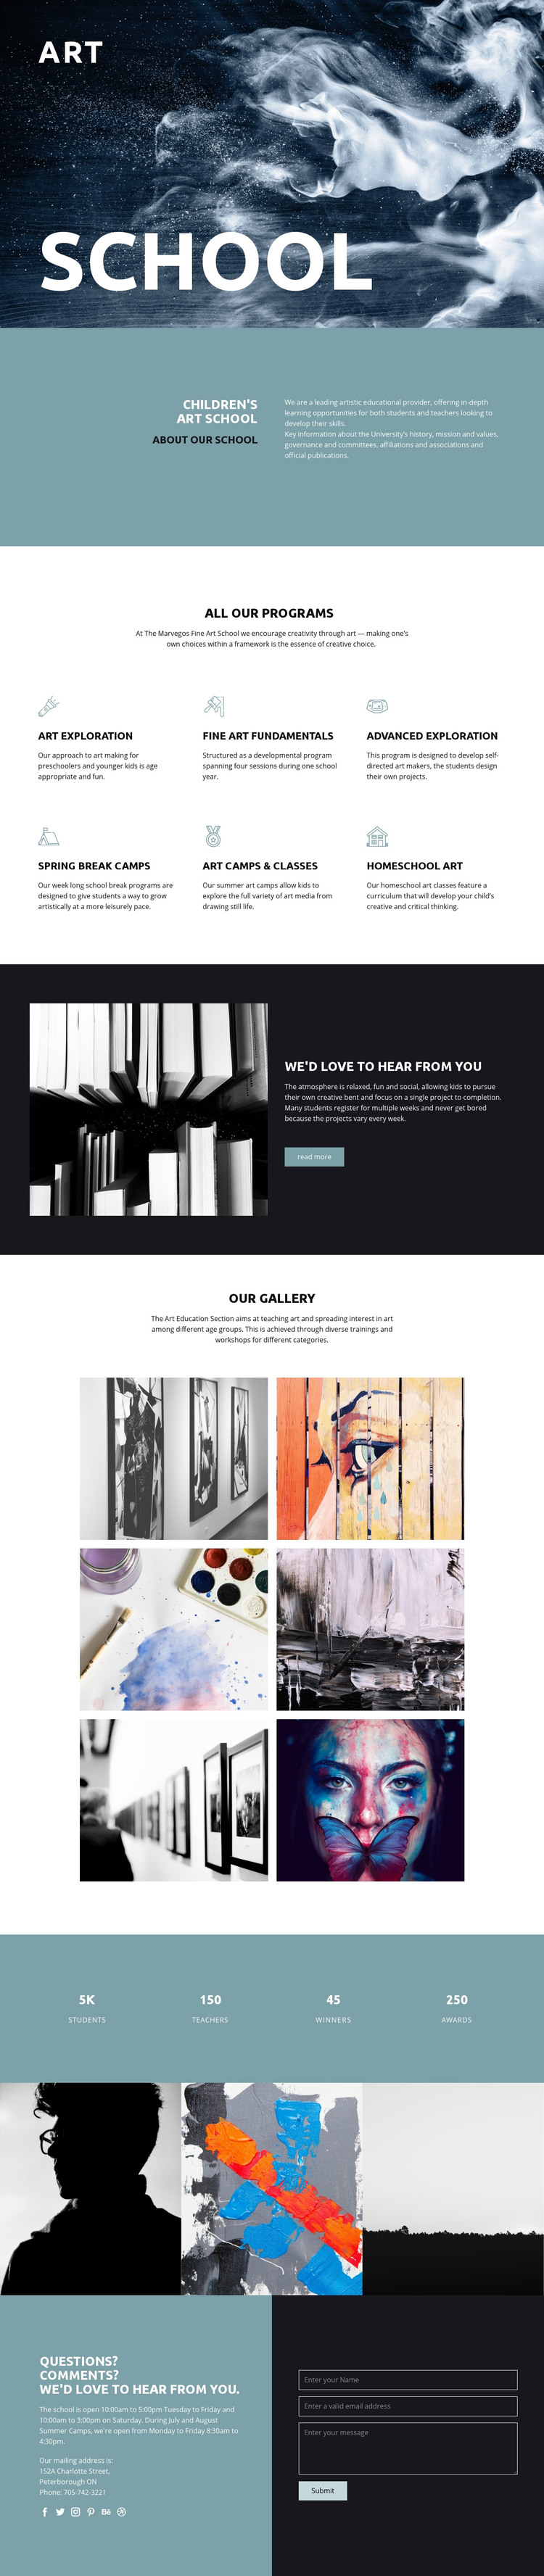 School of artistic education Homepage Design